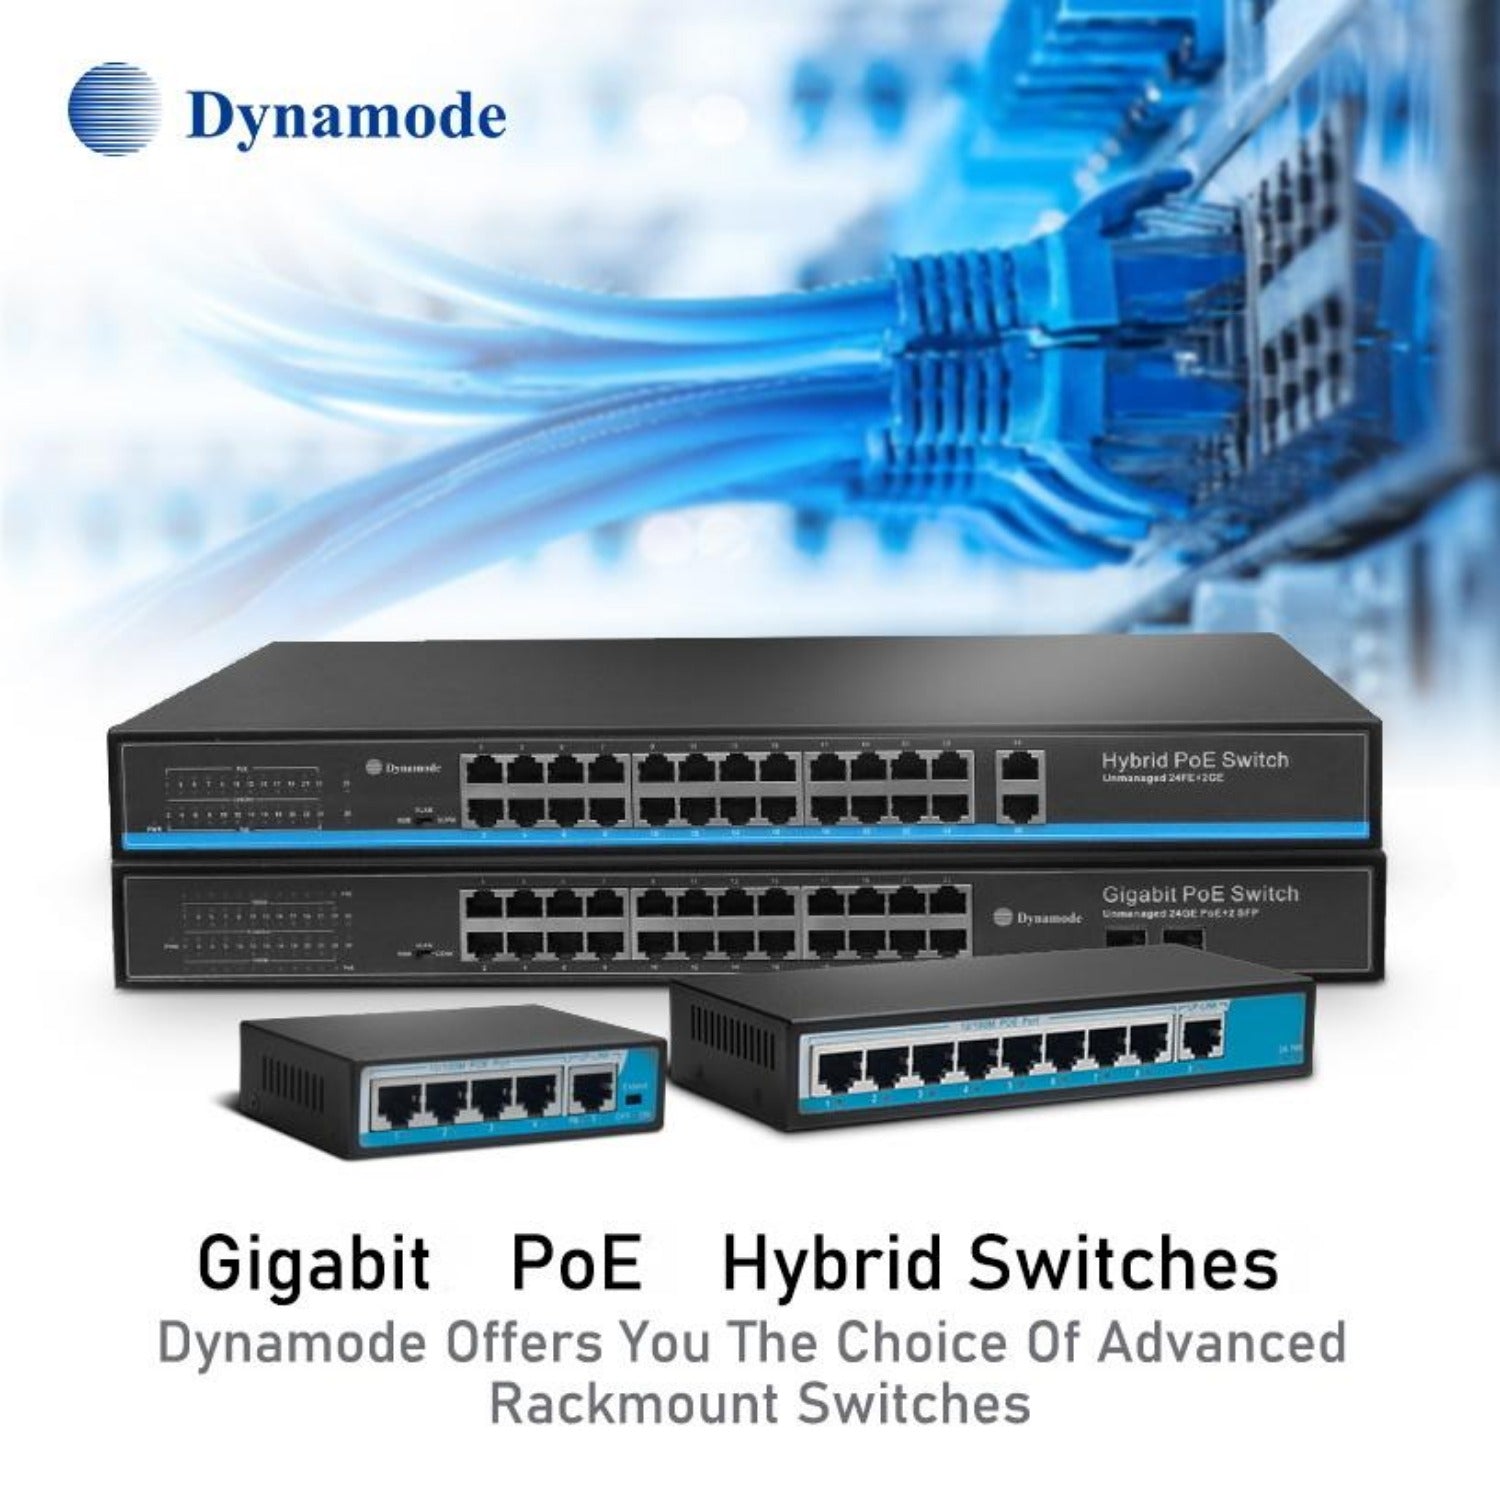 Dynamode SW240010-R 24-Port Rackmount Fast Ethernet Switch